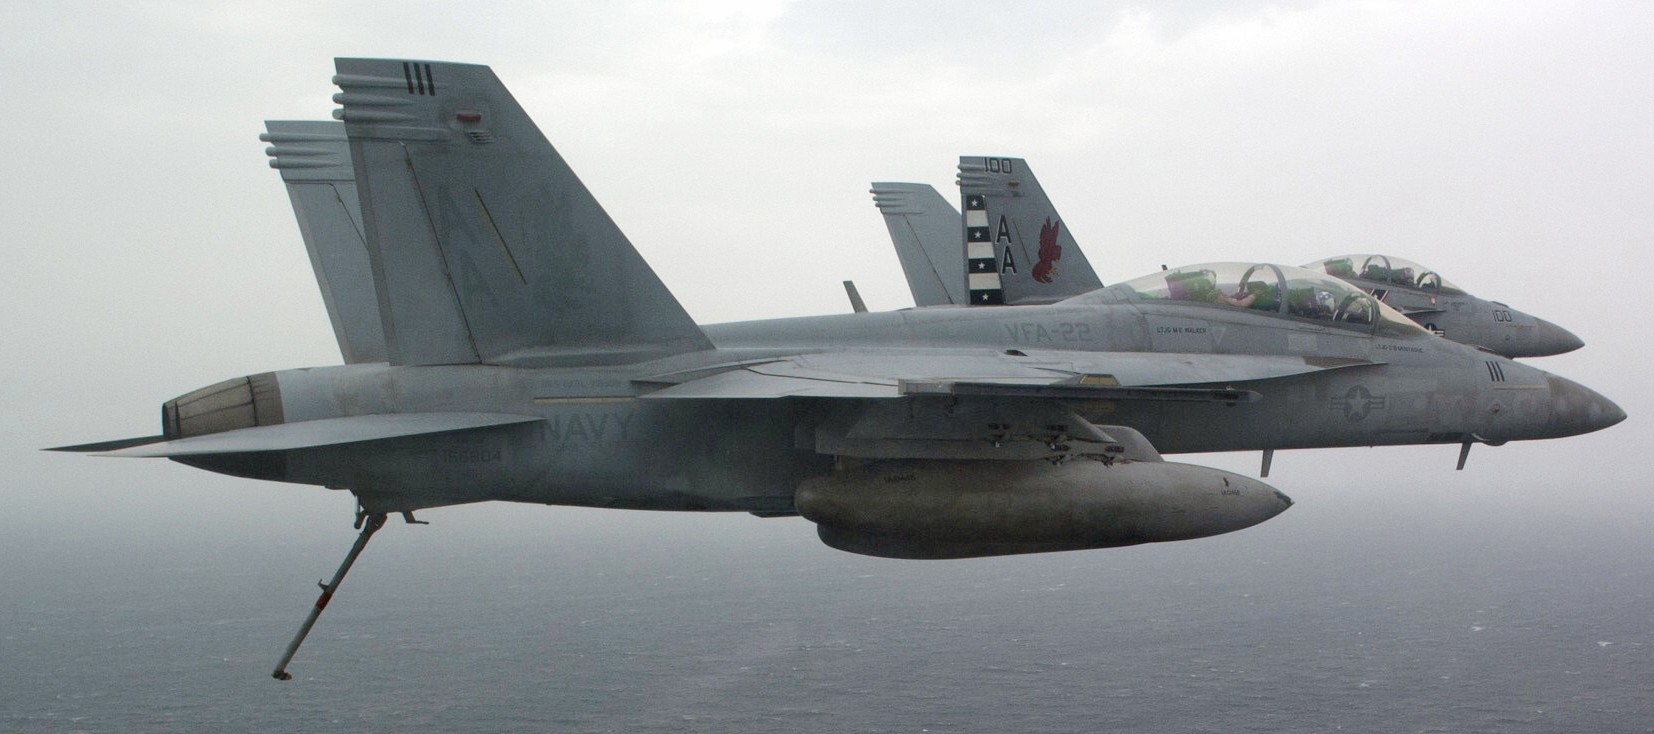 vfa-22 fighting redcocks strike fighter squadron f/a-18f super hornet cvn-70 uss carl vinson cvw-17 us navy 31